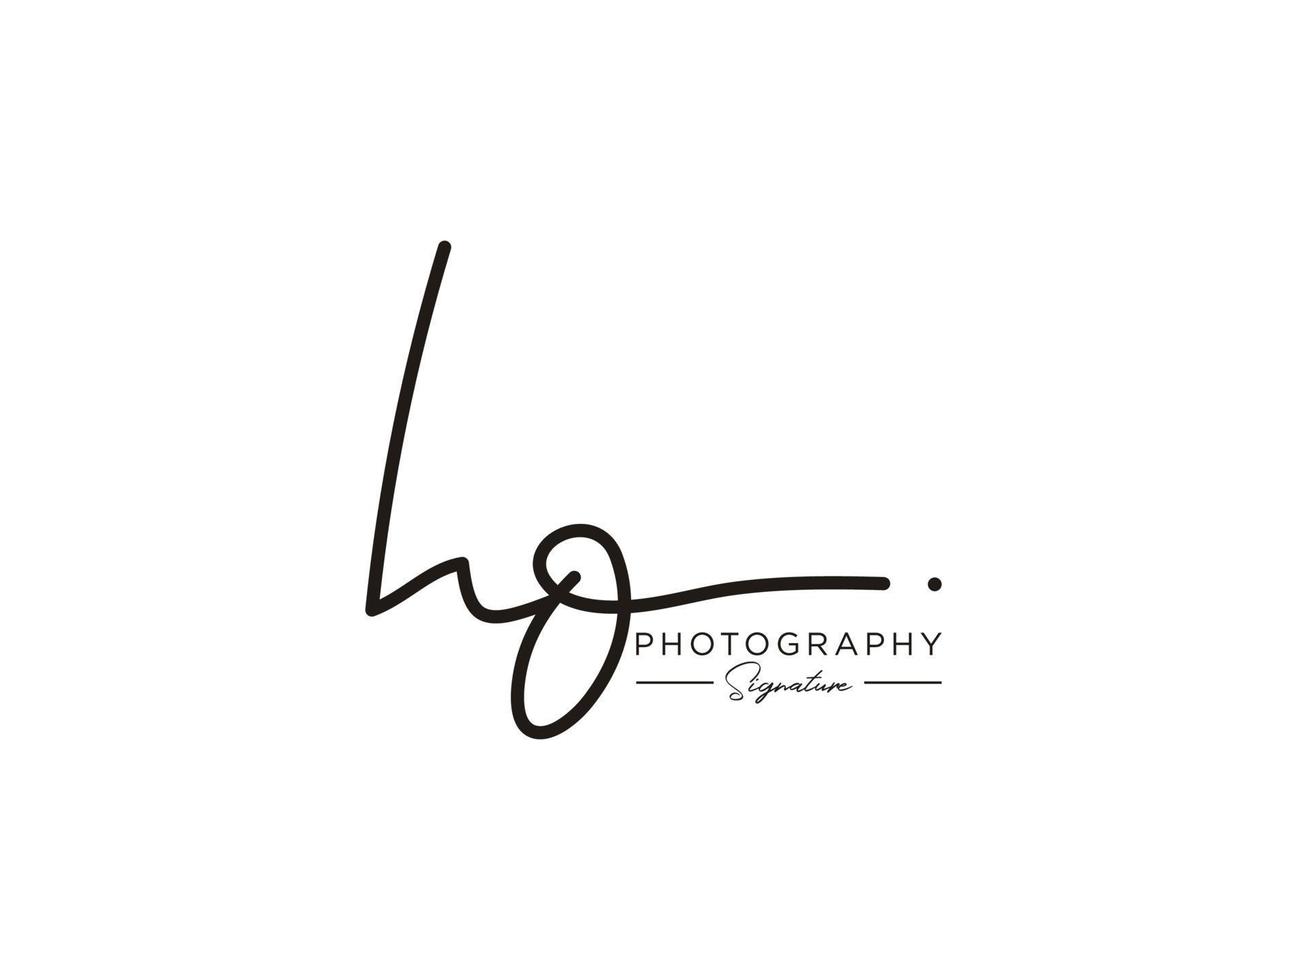 Letter HO Signature Logo Template Vector